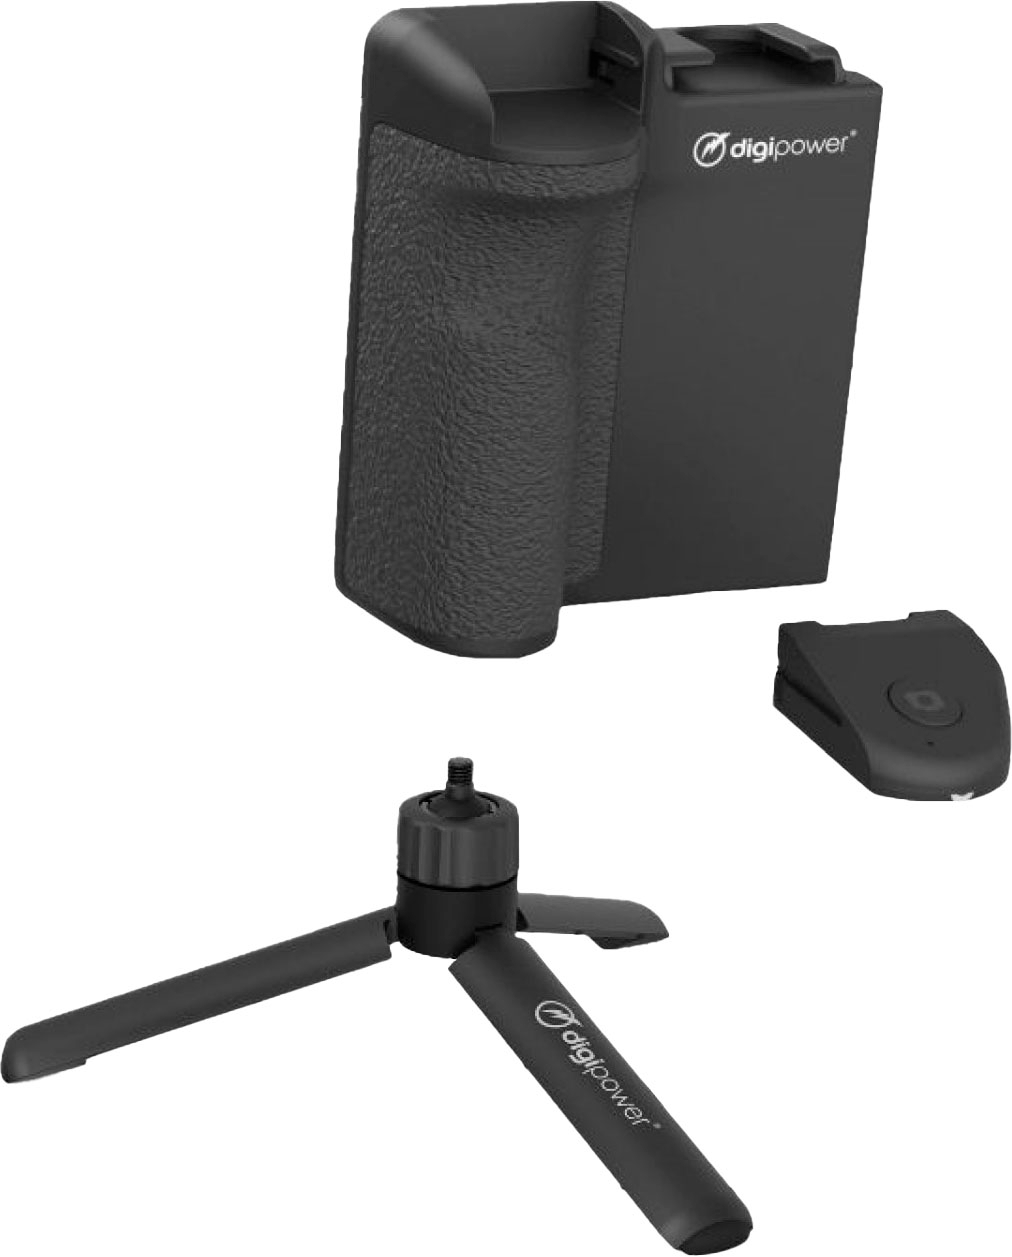 Angle View: Digipower - Smartphone Camera Grip